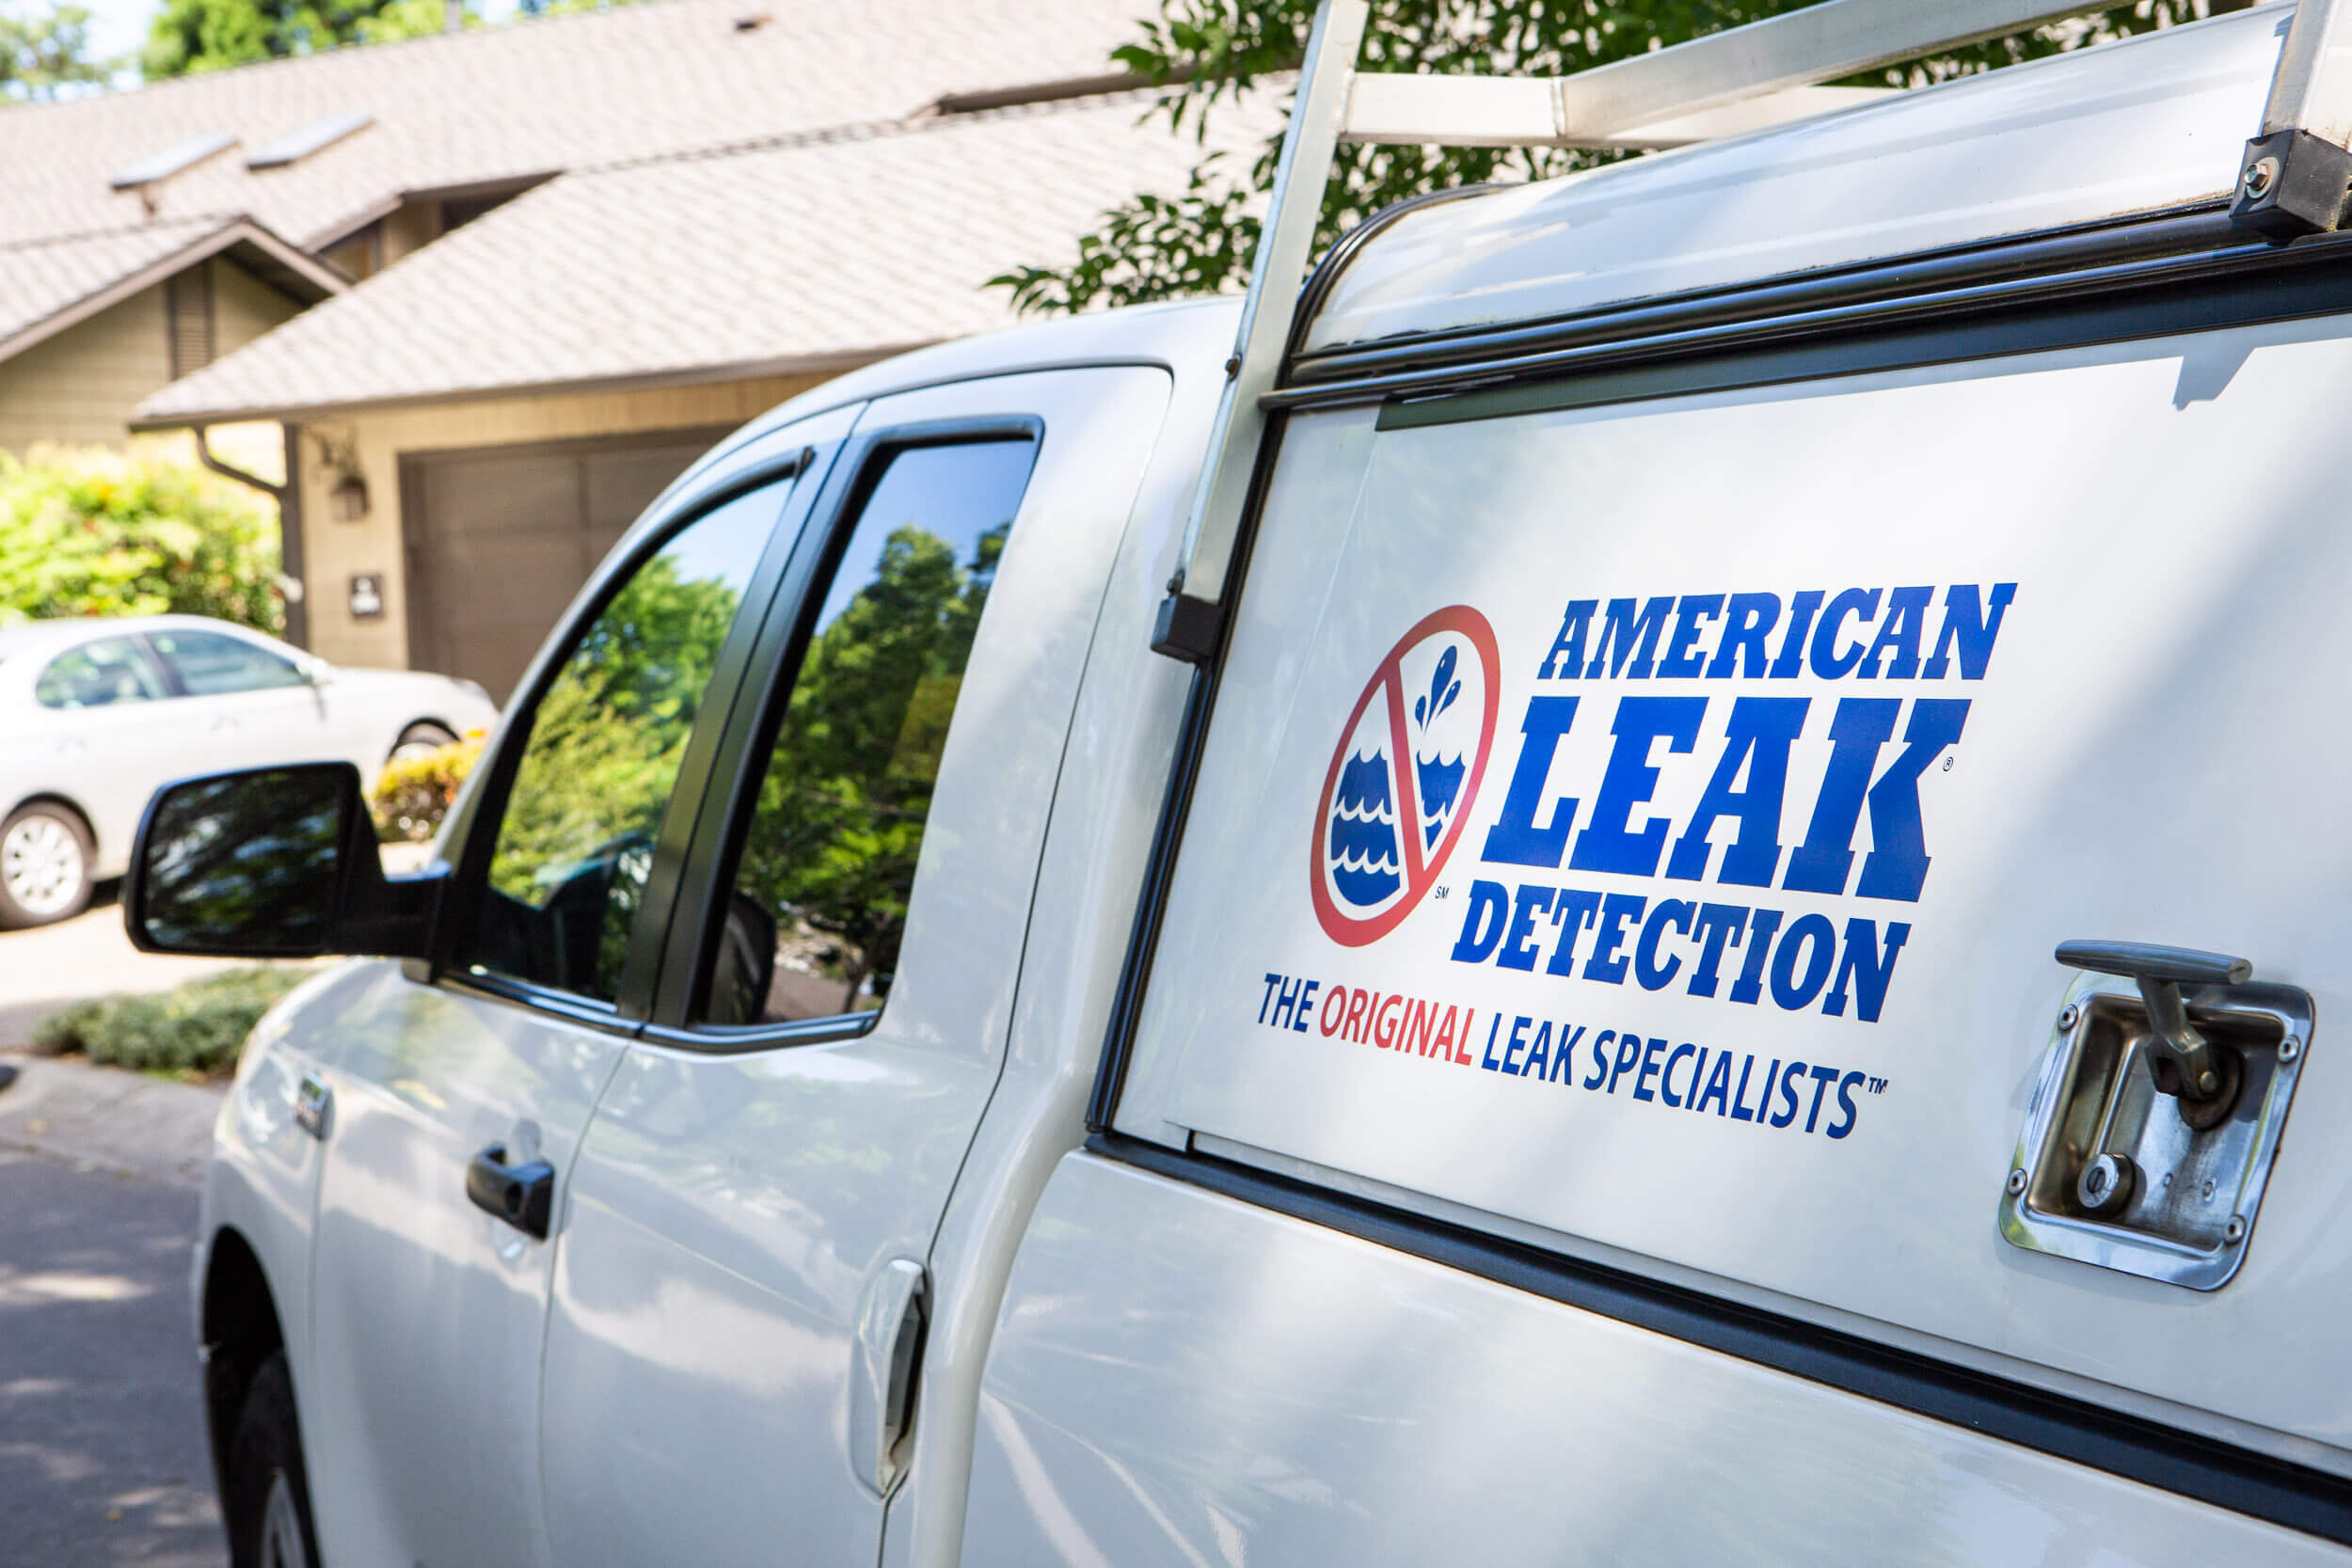 american leak detection assignment